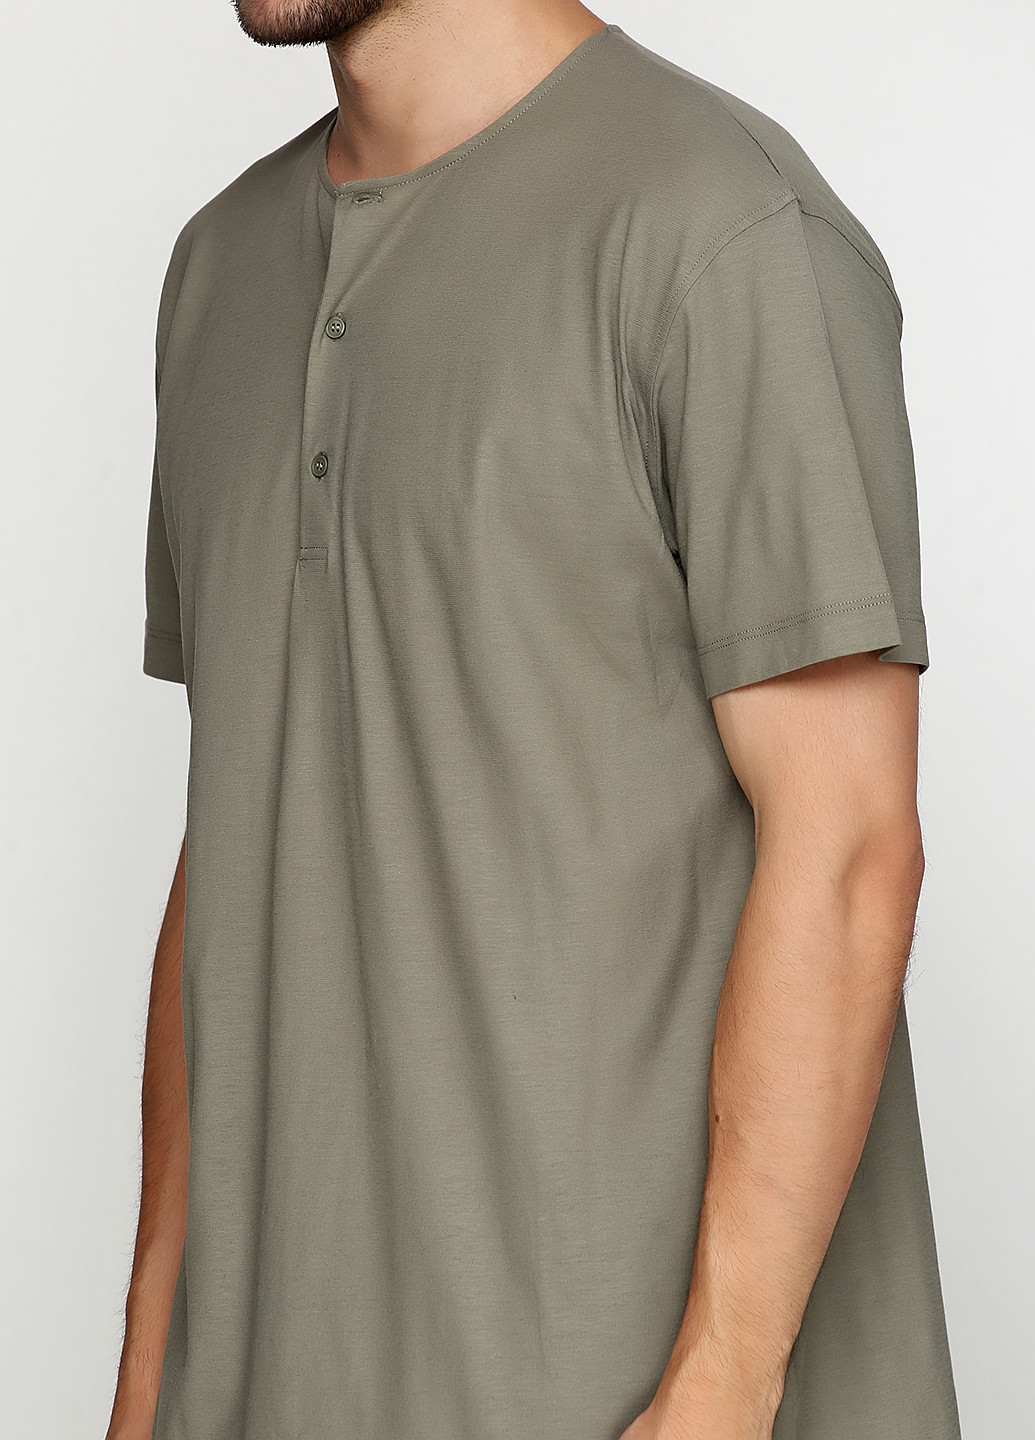 Хаки (оливковая) футболка Cos